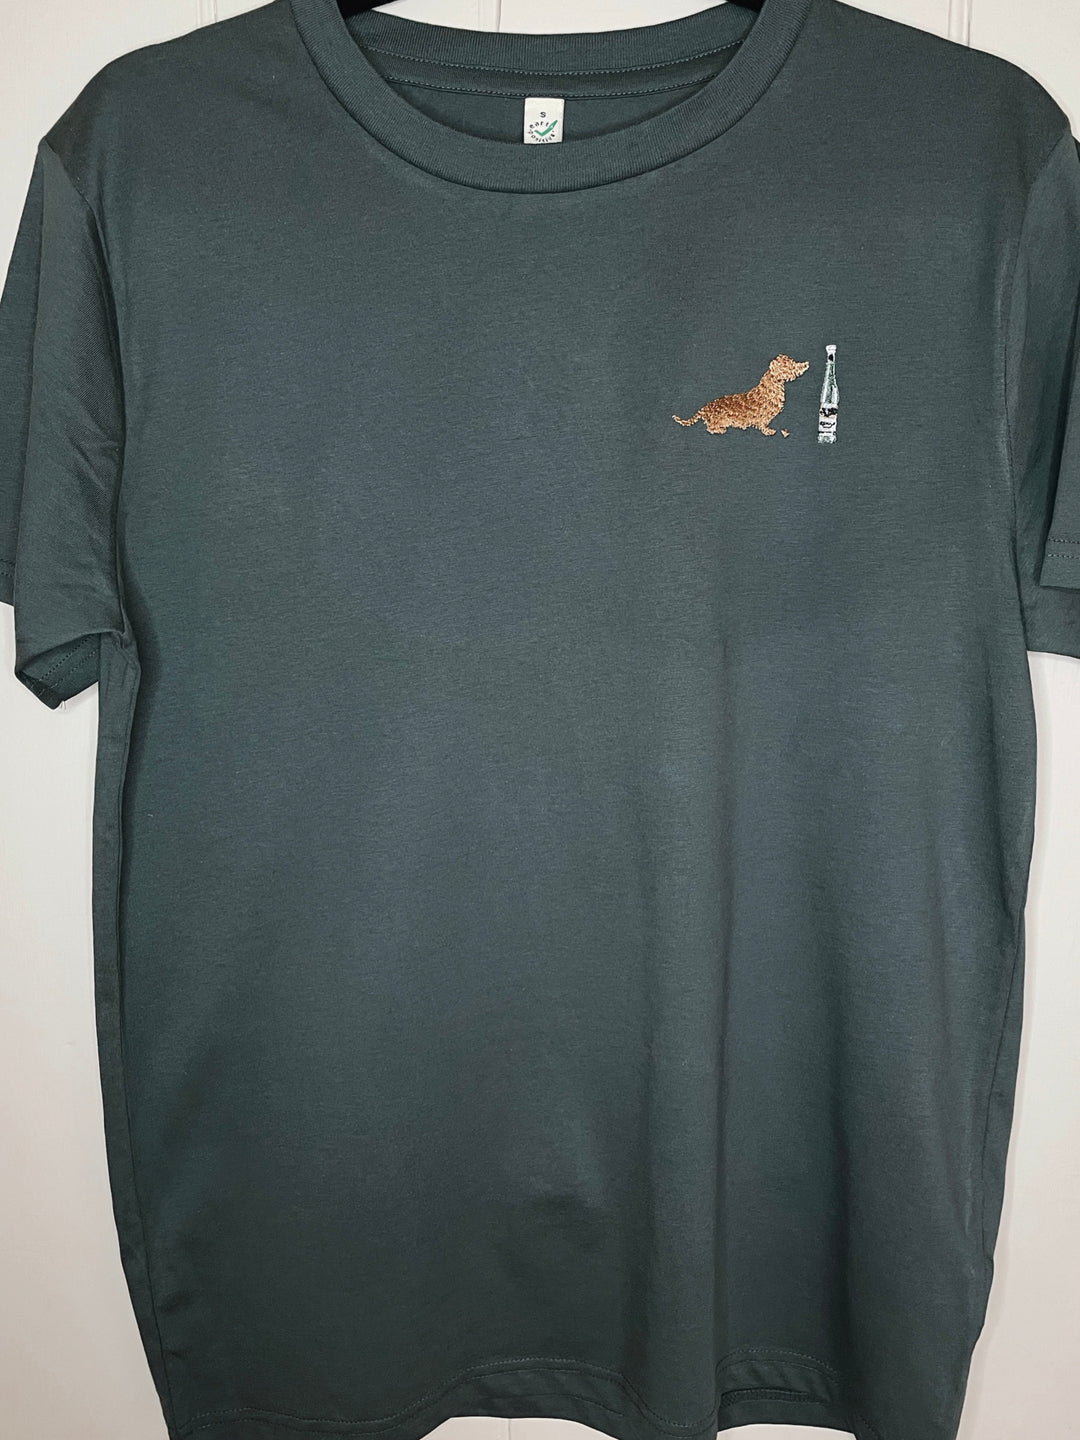 Embroidered Dachshund T-Shirt